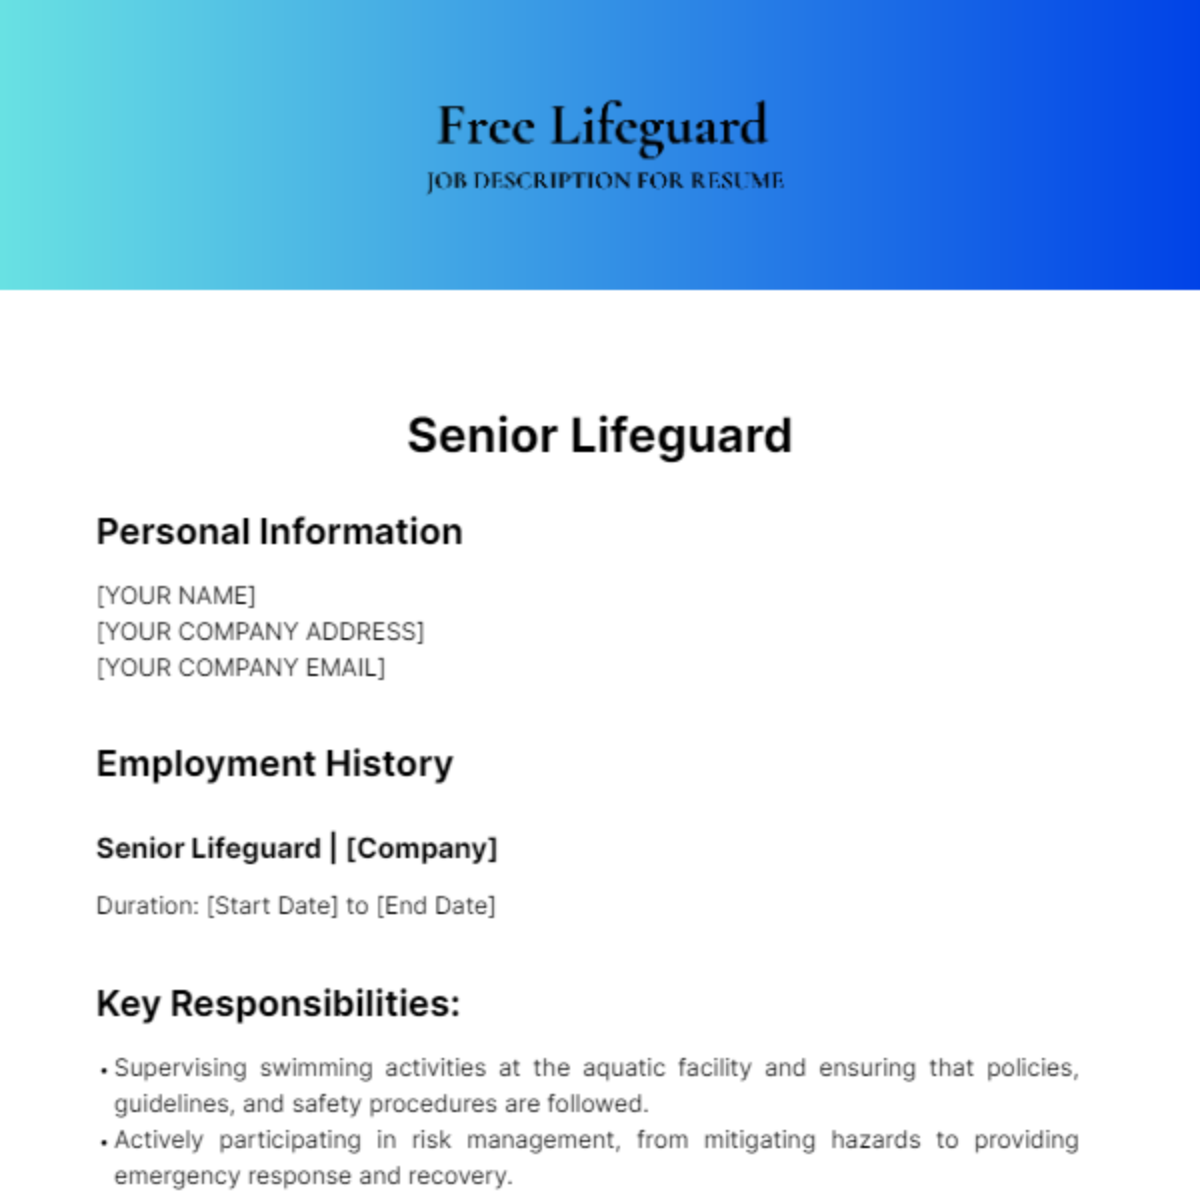 Lifeguard Job Description for Resume Template